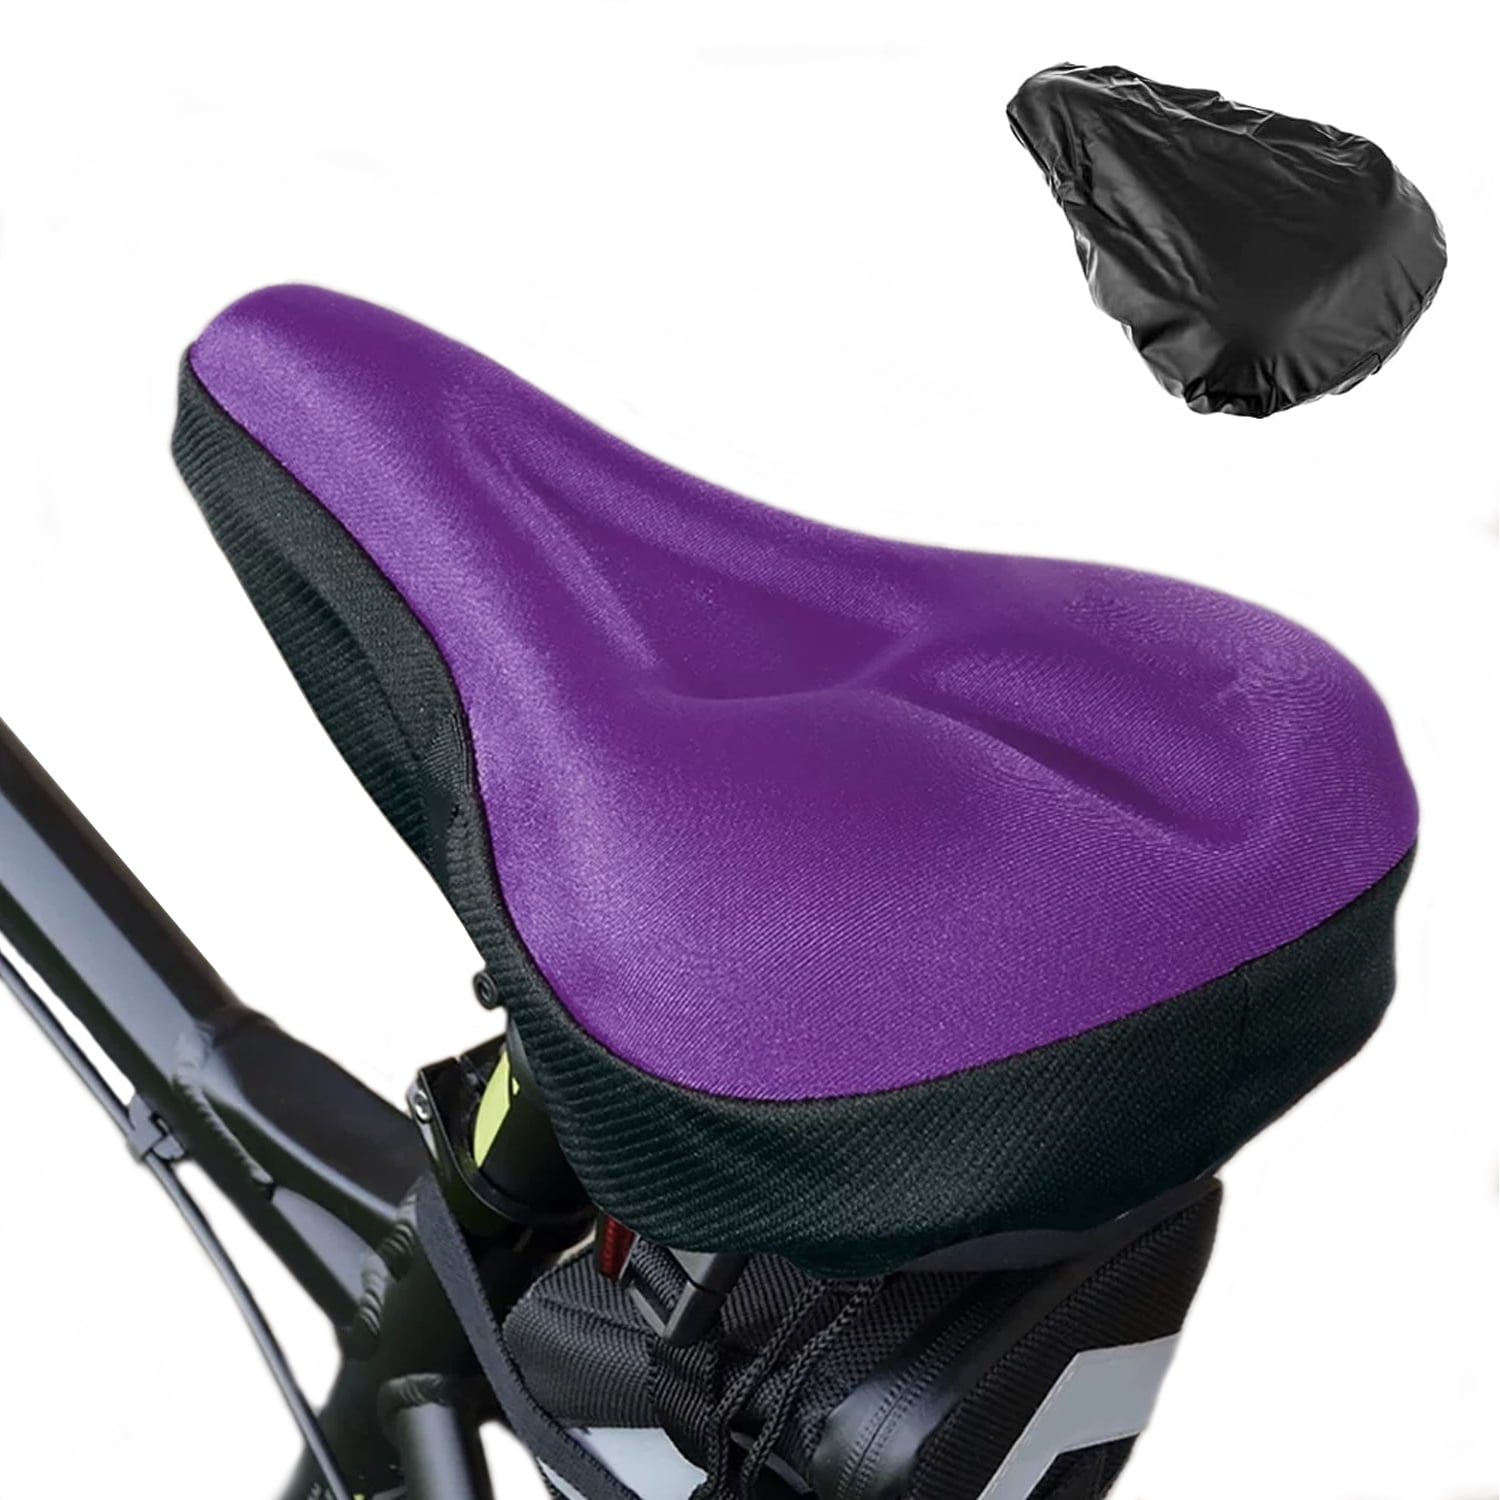 Bikeroo Bike Seat Cushion, Padded Gel Wide Adjustable Cover for